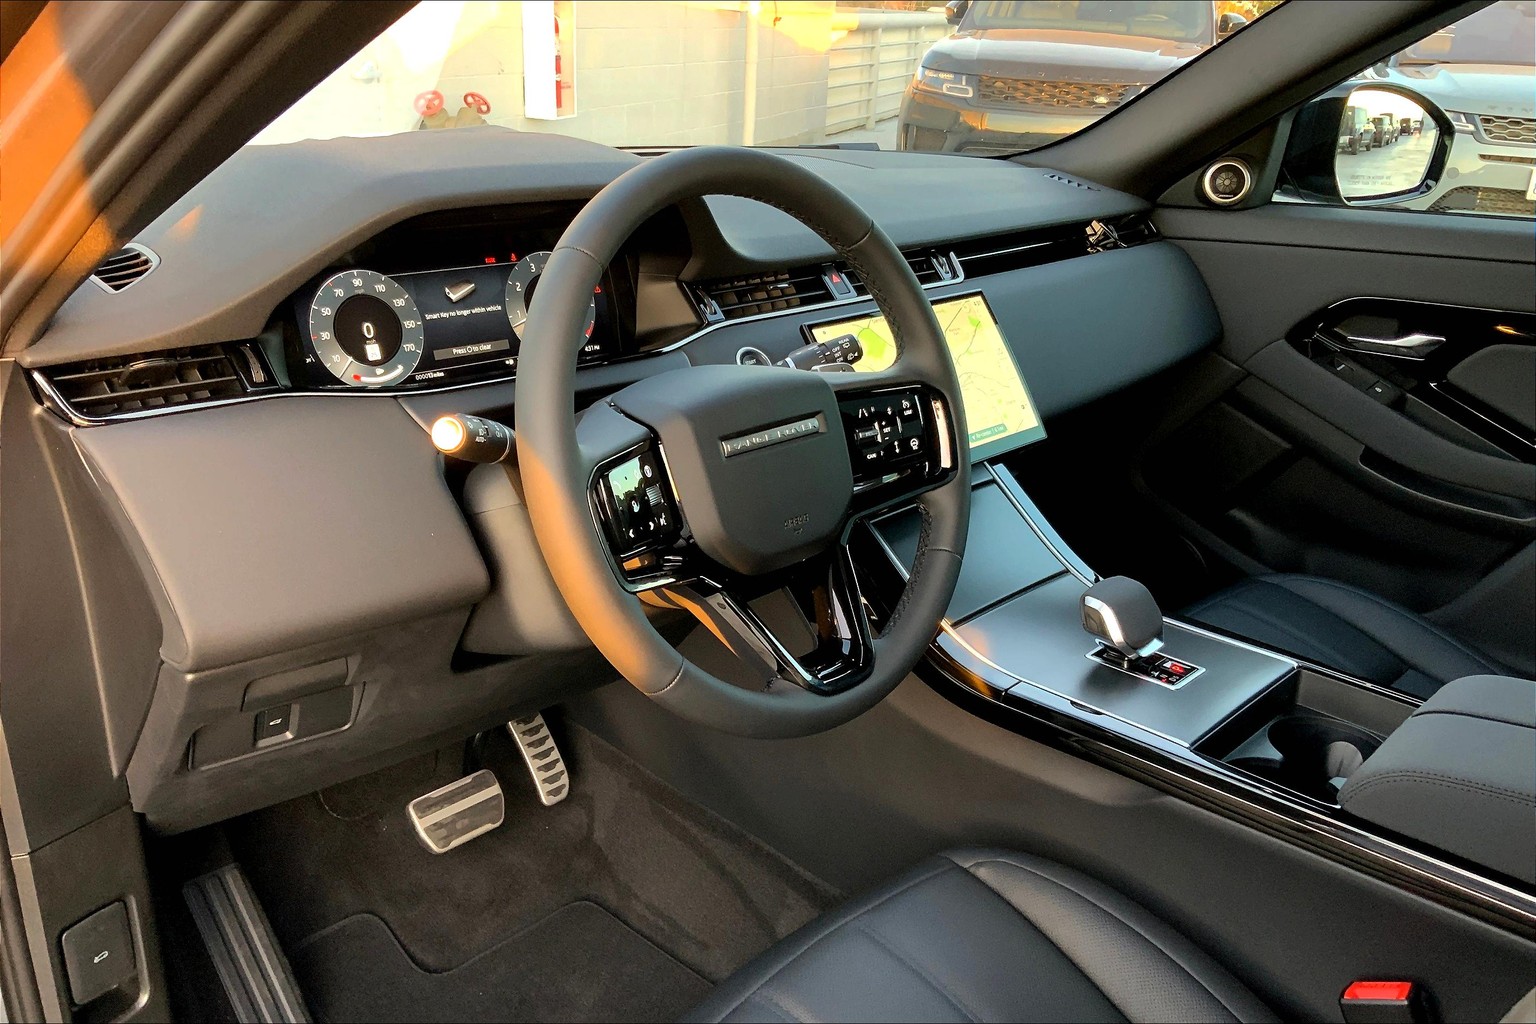 Inside the Land Rover Range Rover Evoque